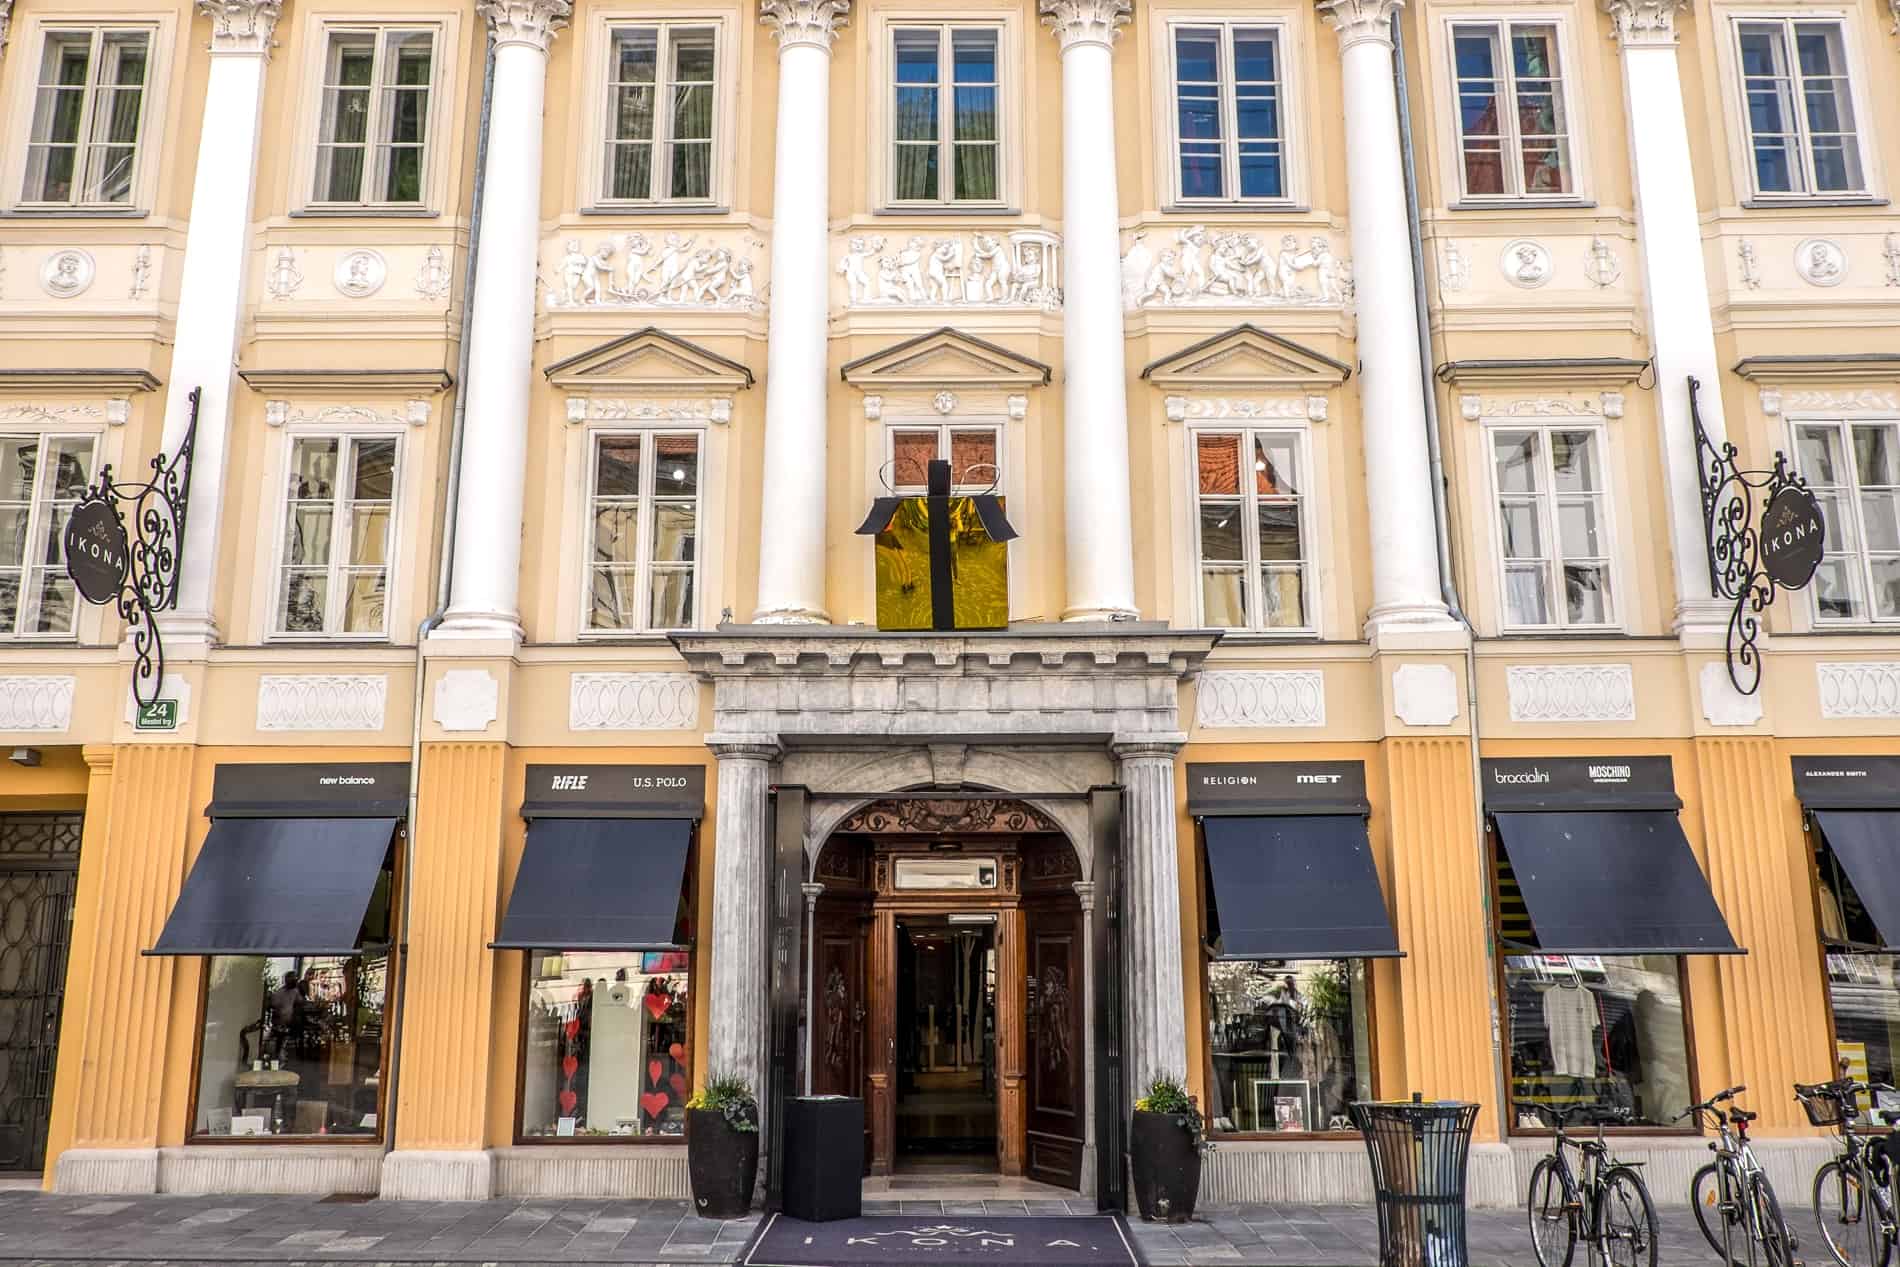 Yellow and white renaissance era buildings in Ljubljana Old Town, Slovenia.